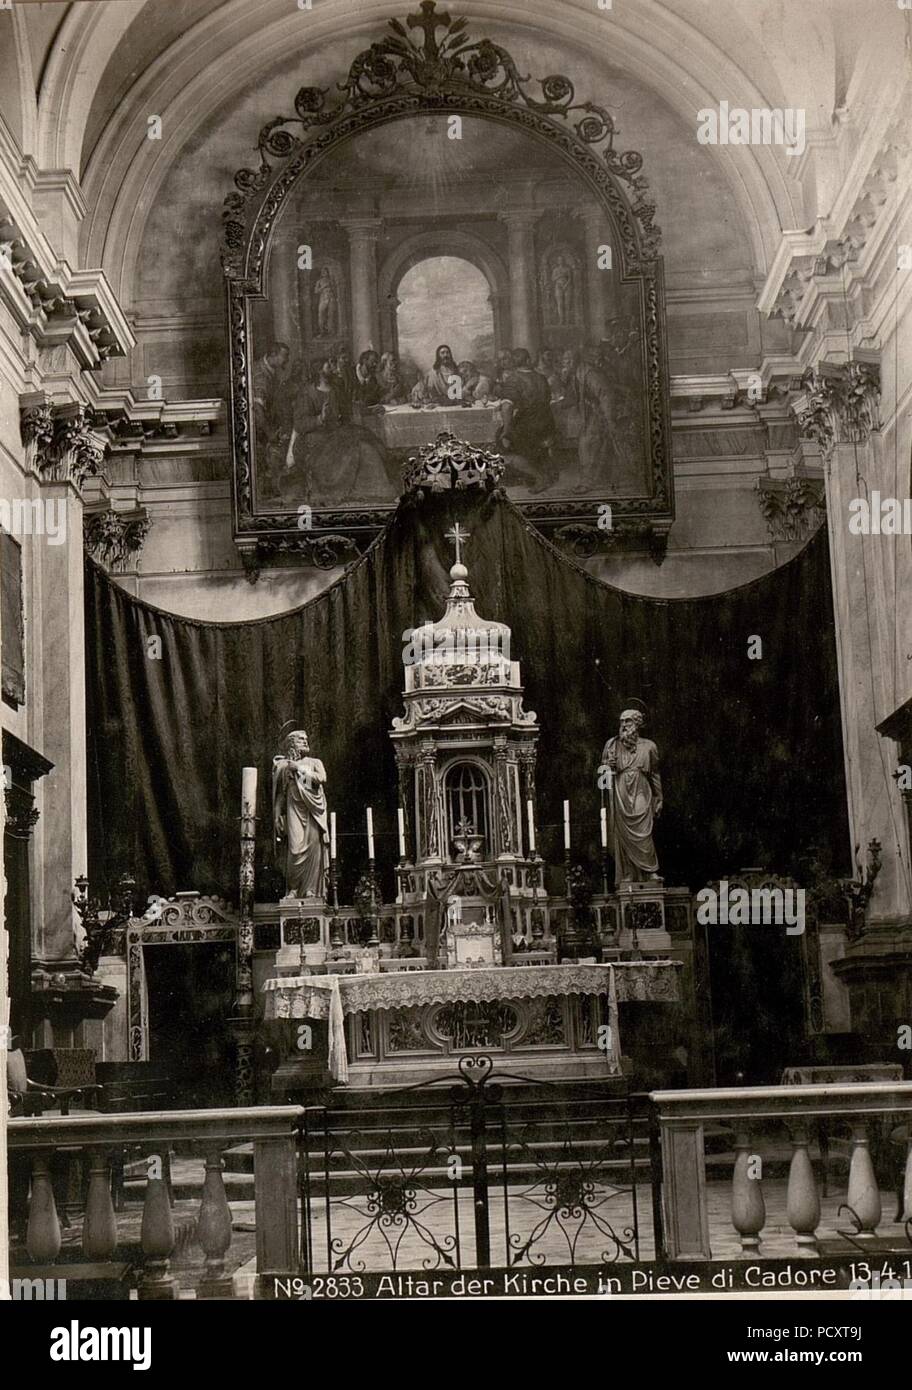 Altar der Kirche in Pieve di Cadore. 13.4.18. Stockfoto